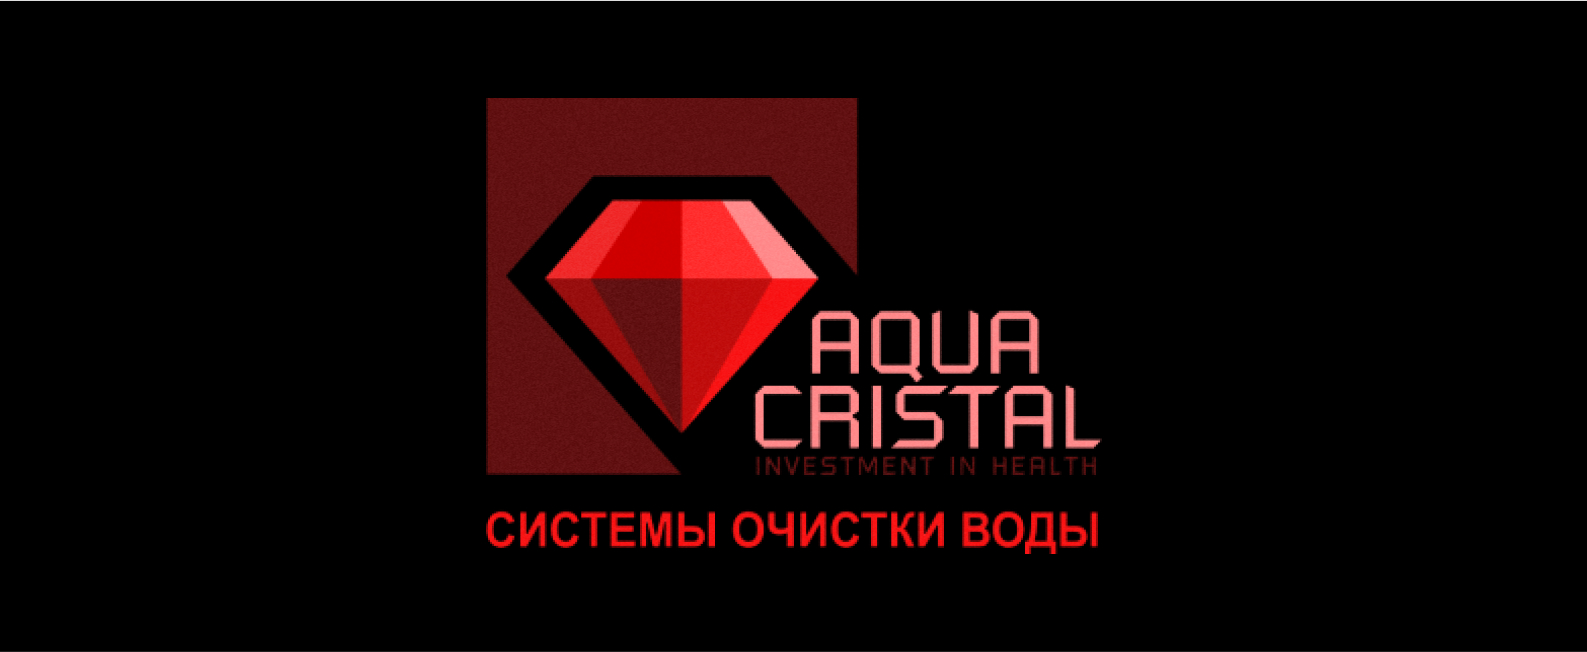 AQUA CRISTAL - water purification filter store